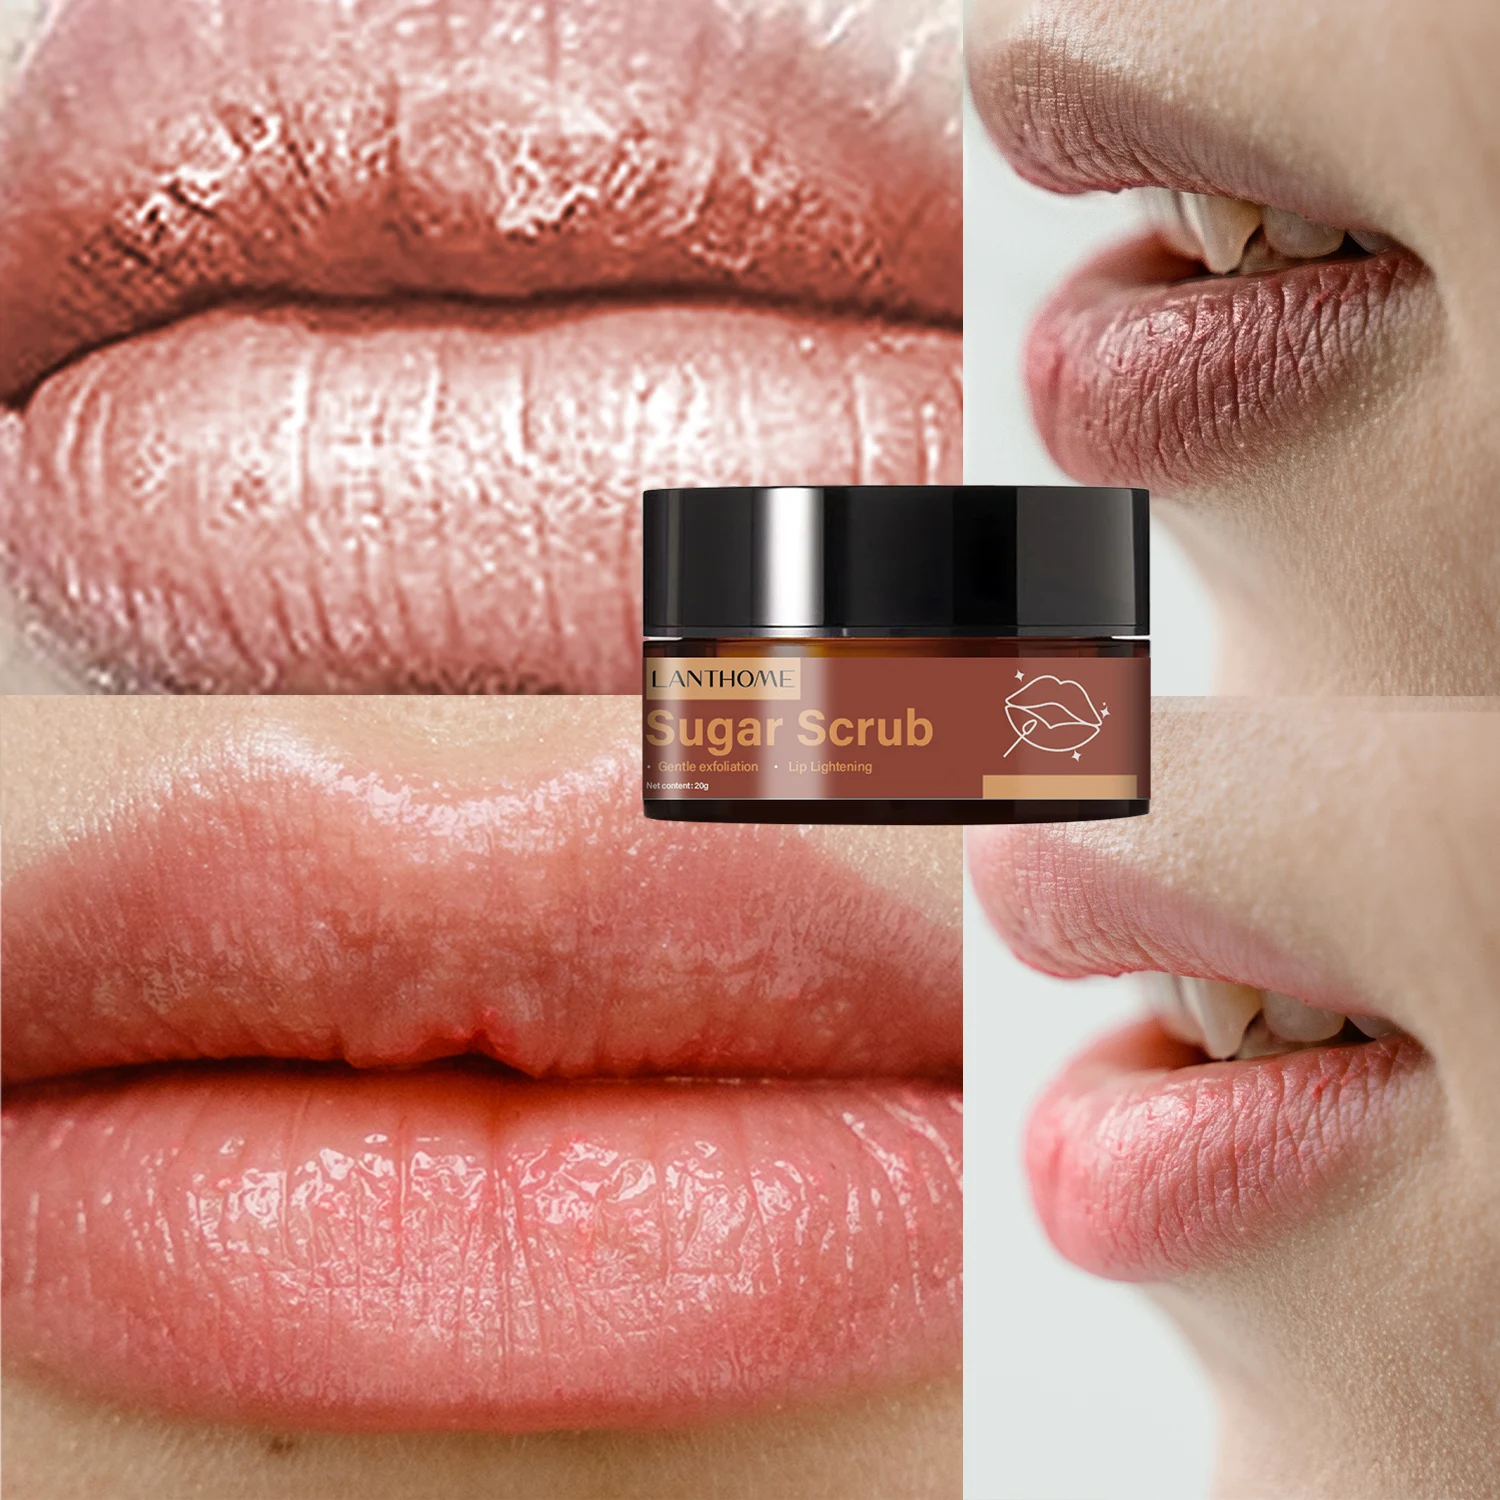 

Lip Lightening Scrub Balm Remove Dull Lips Moisturizing Reduce Pigmentation Anti-Cracking Hyaluronic Acid Brighten Black Lips